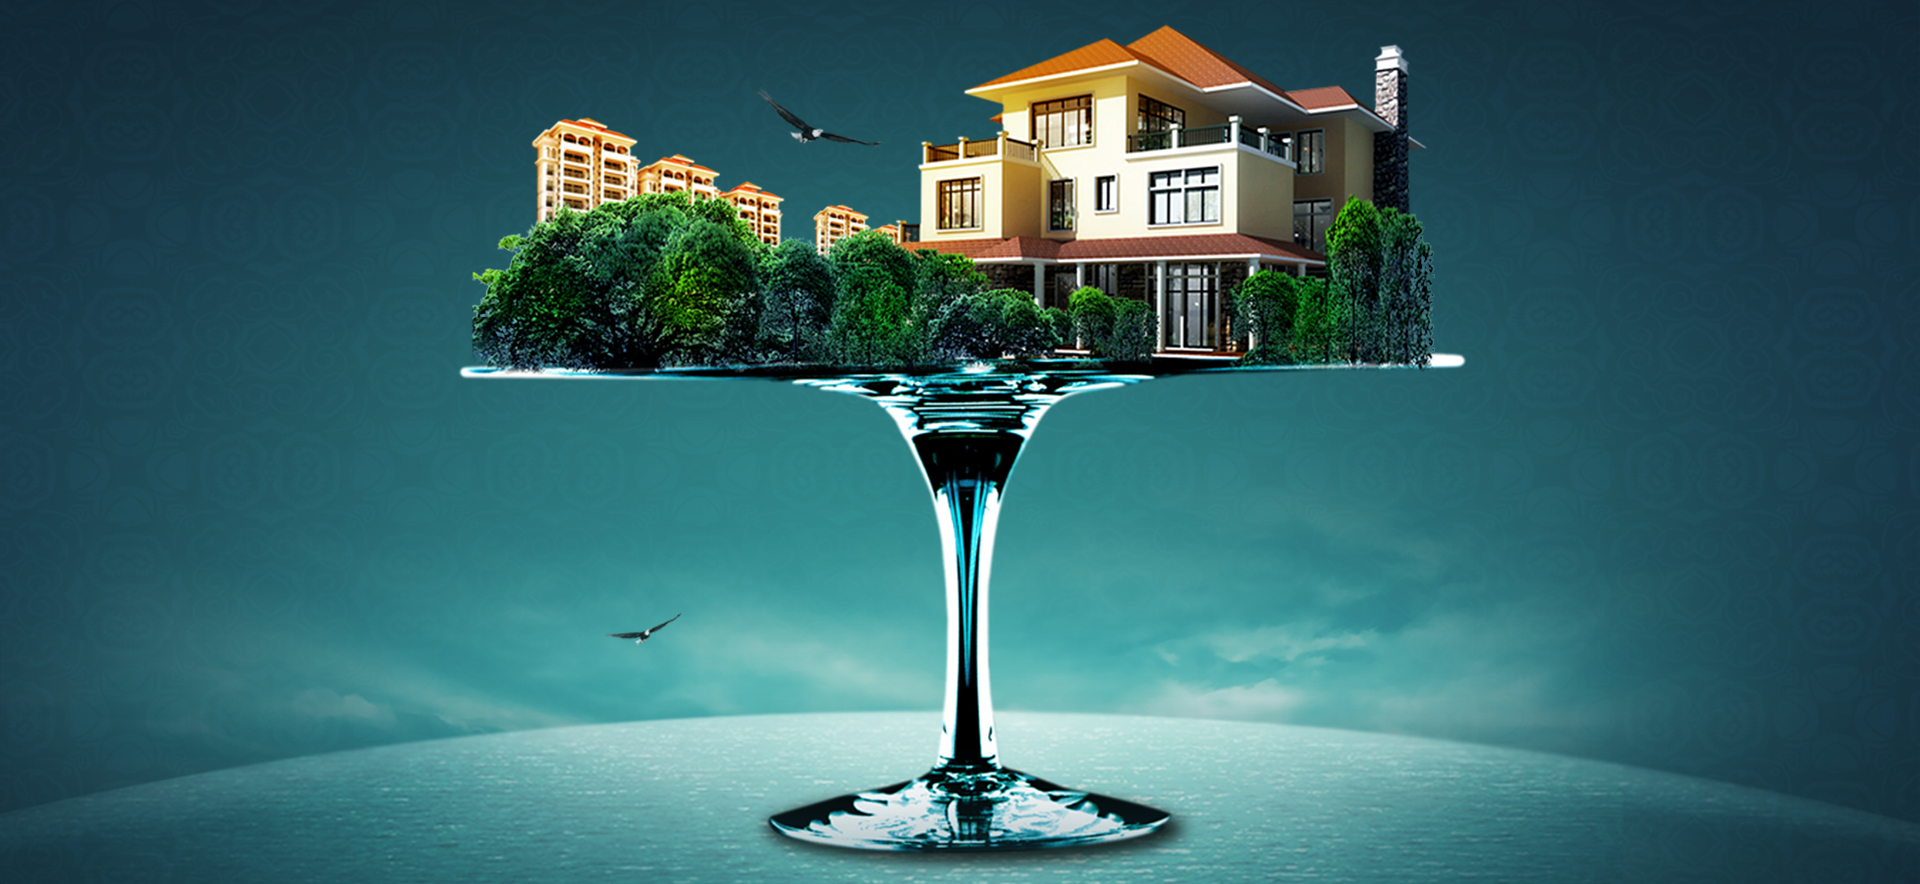 wonderful villa design in glass, real estate free backgrounds